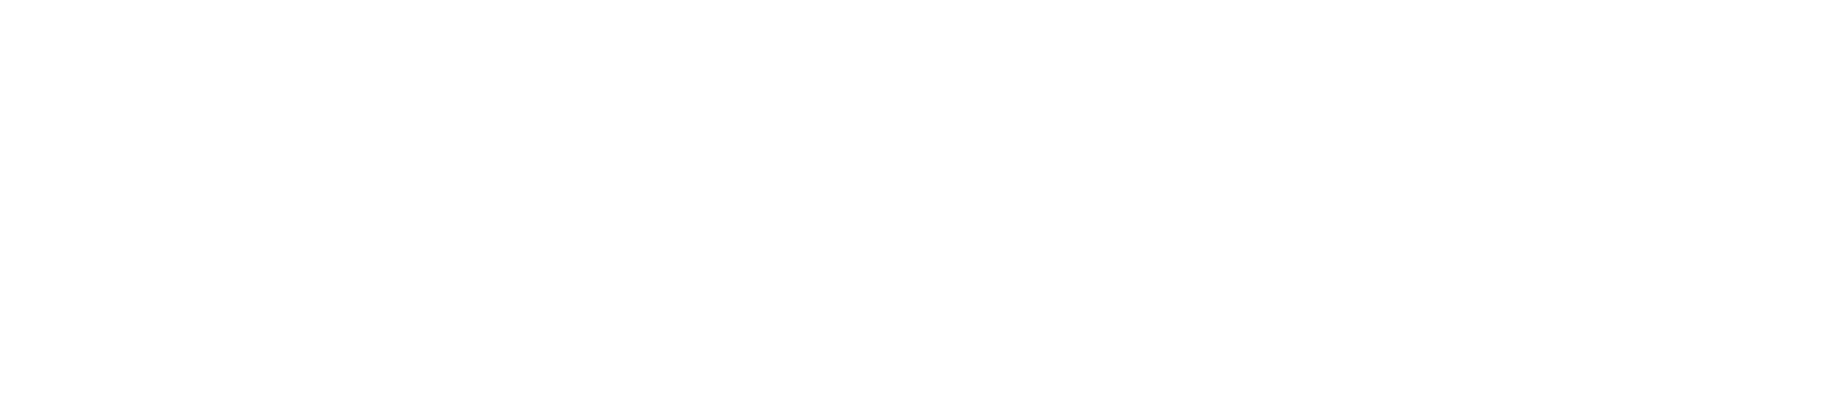 Bracalente Manufacturing Group siden 1950